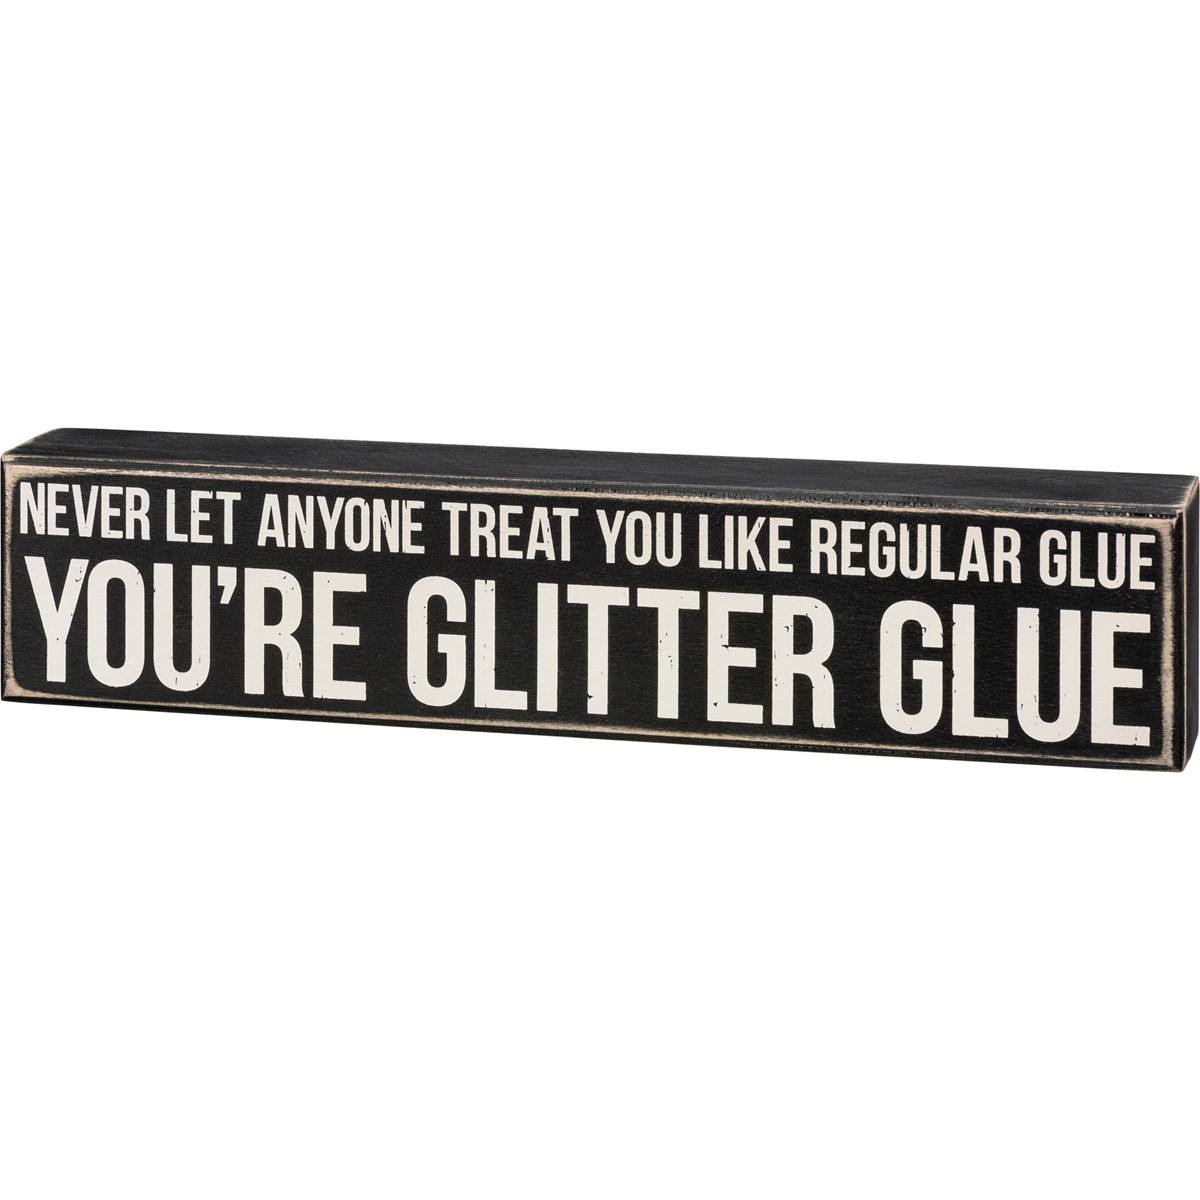 You're Glitter Glue Box Sign - Wood